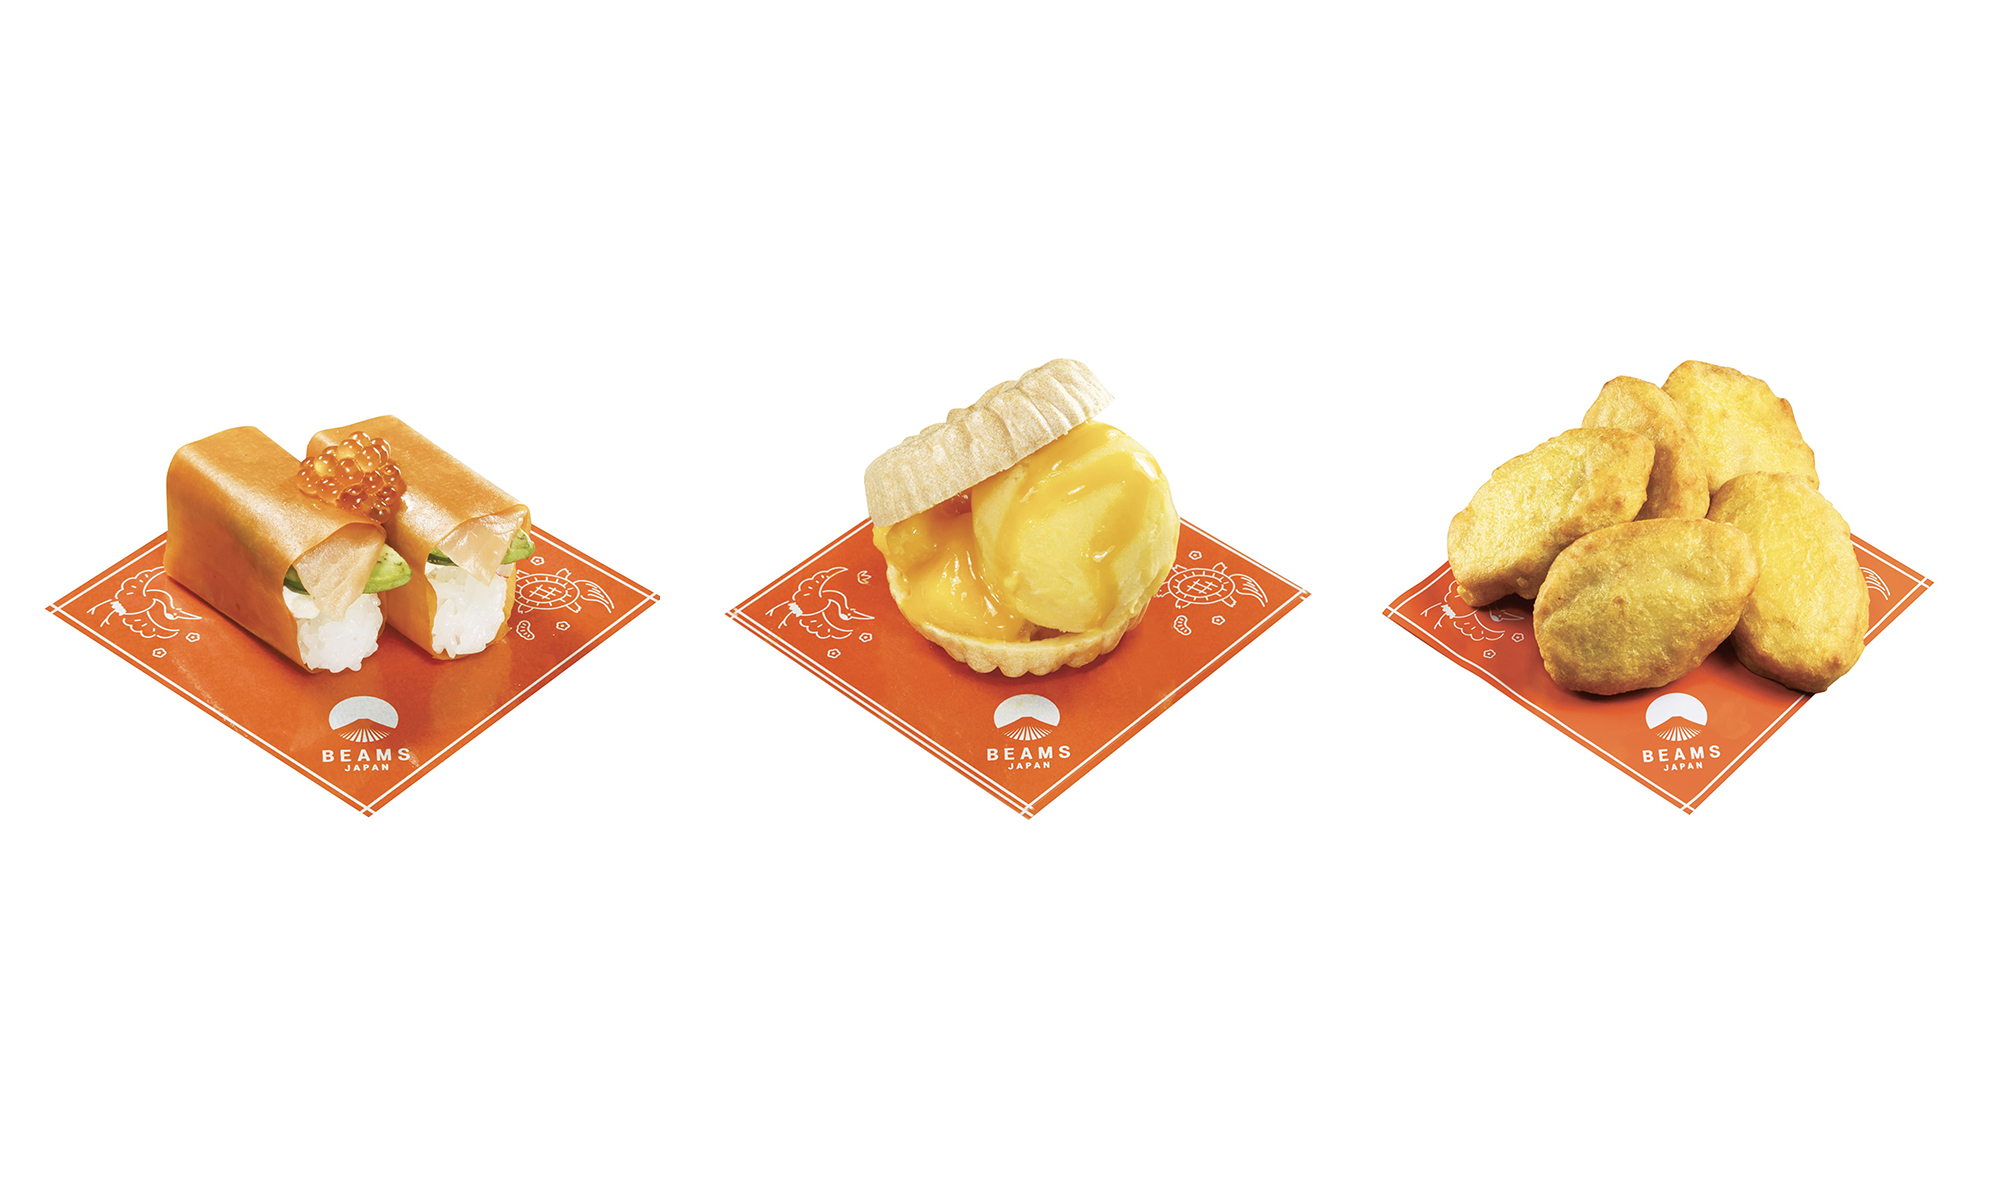 BEAMS JAPAN 携手 Kura Sushi 推出特别版菜单